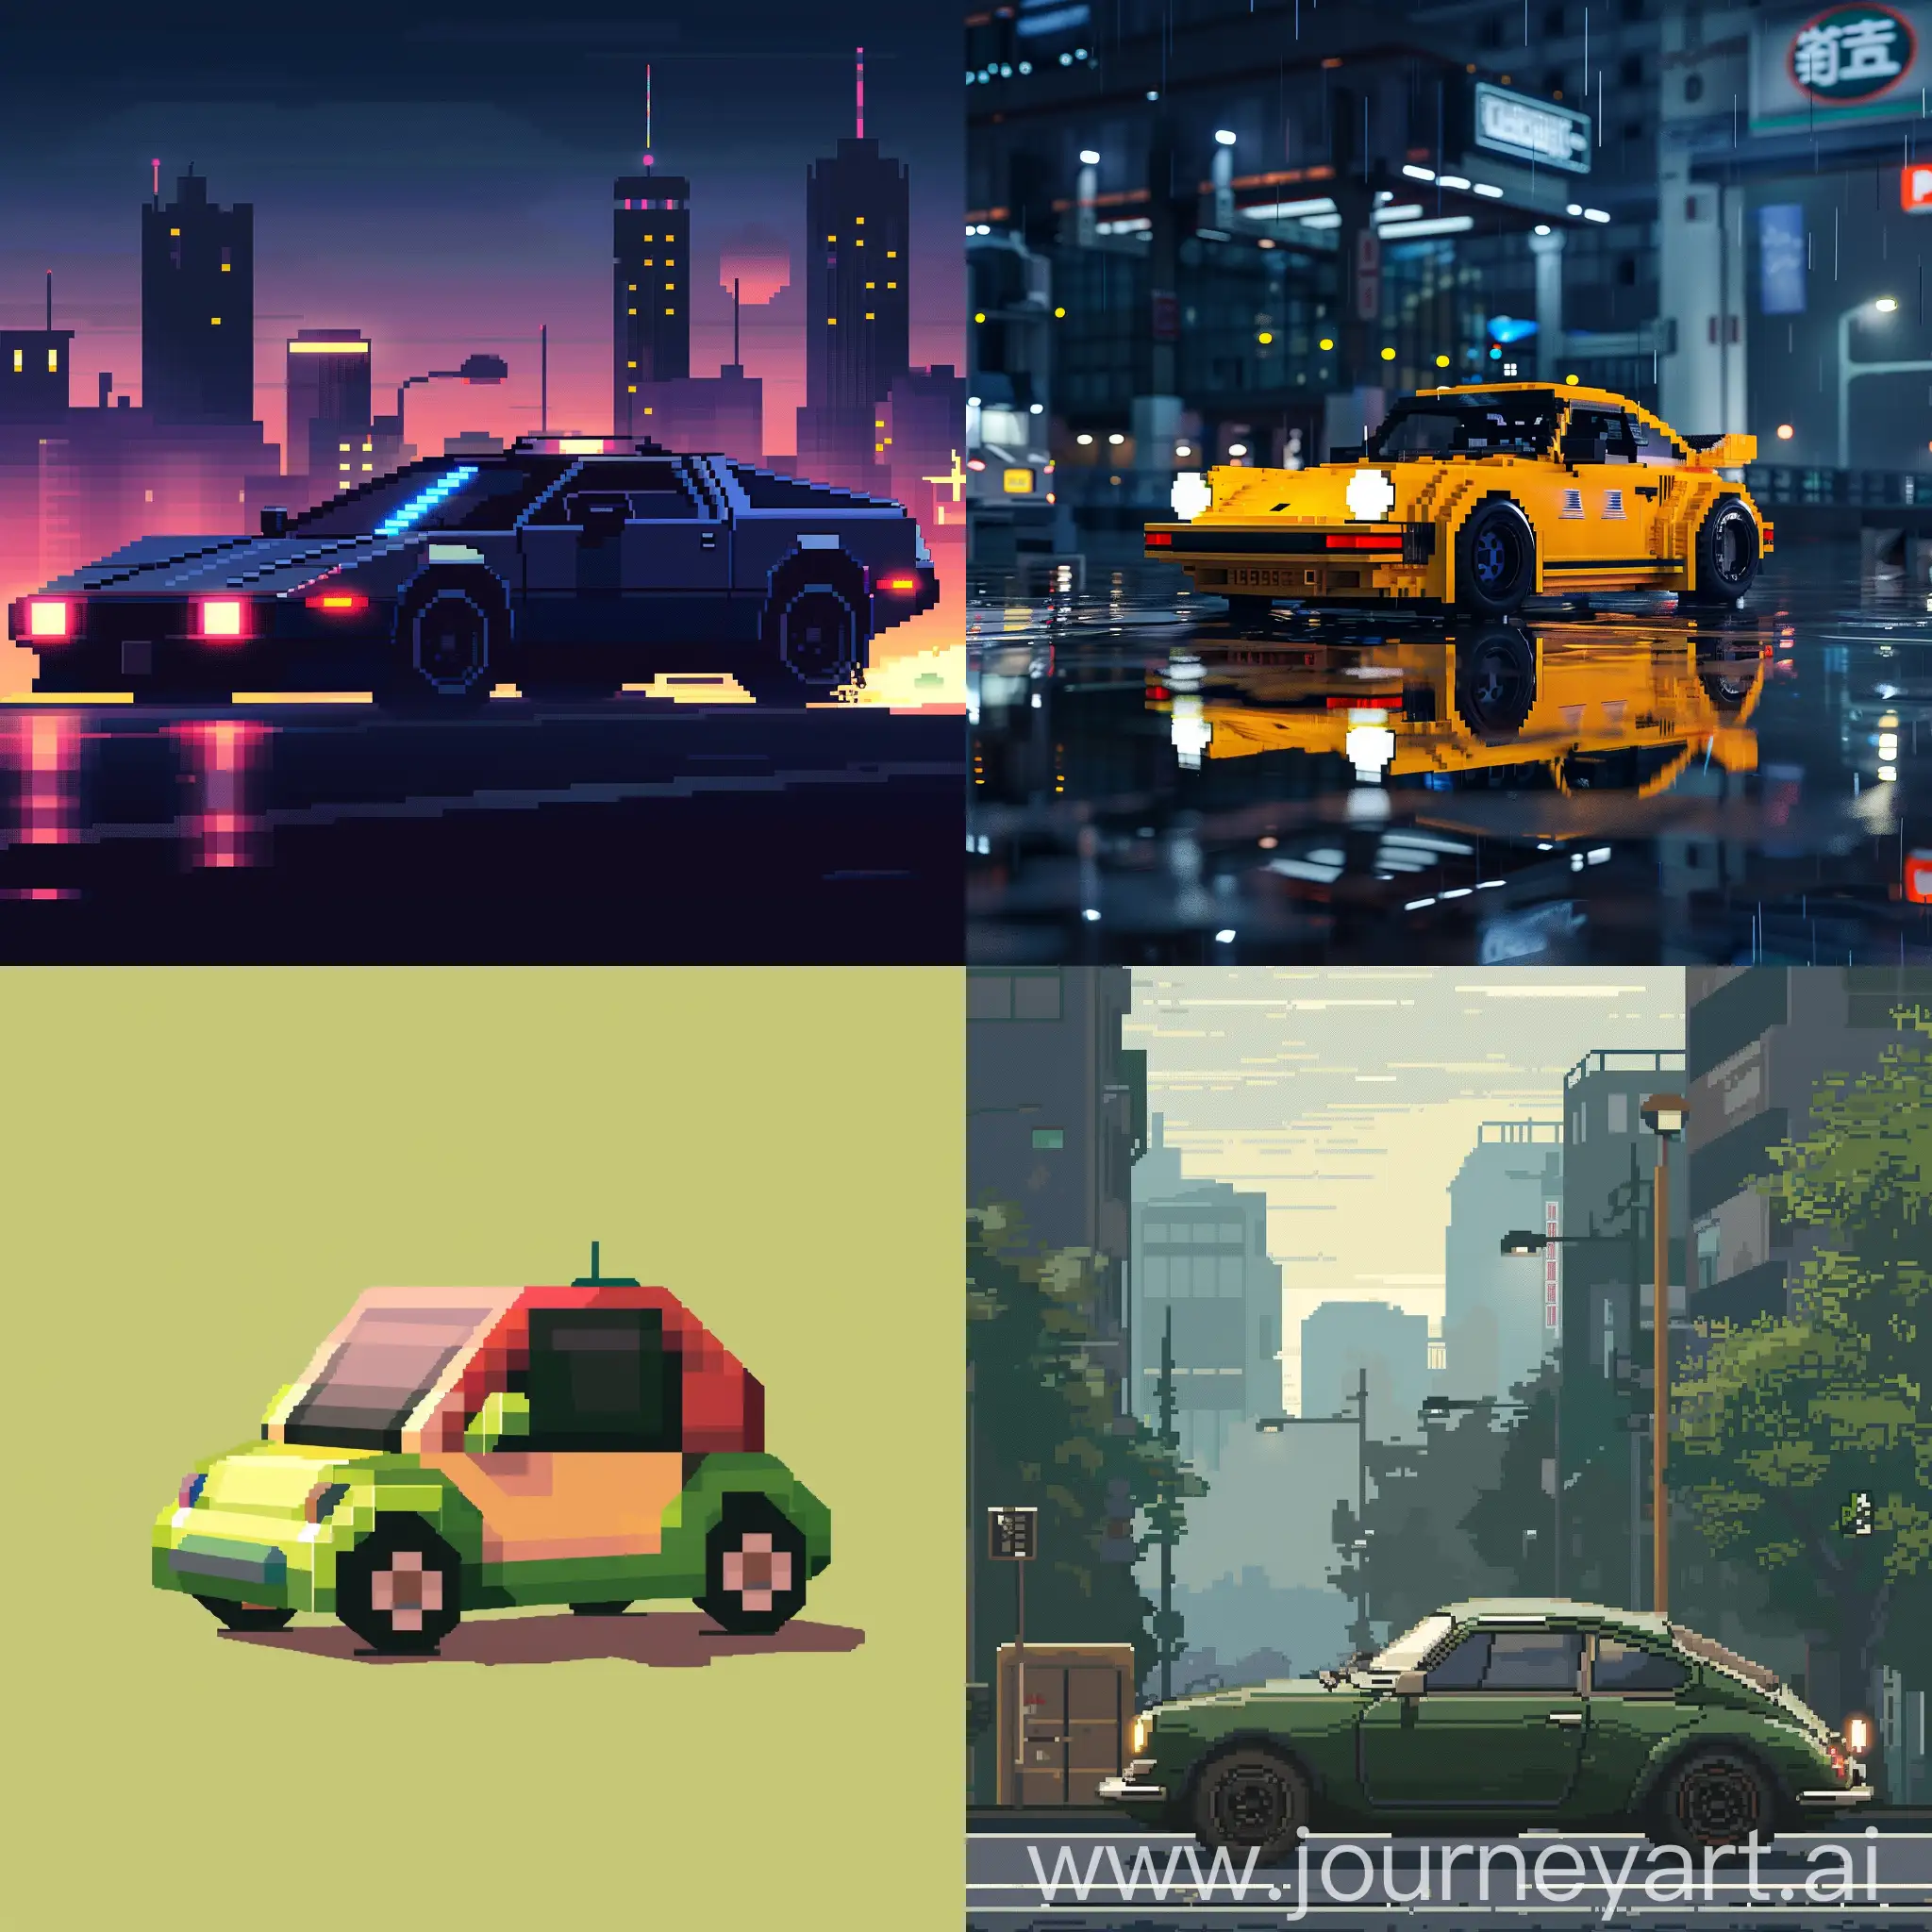 Vibrant-Pixel-Art-Customized-Car-Design-in-11-Aspect-Ratio